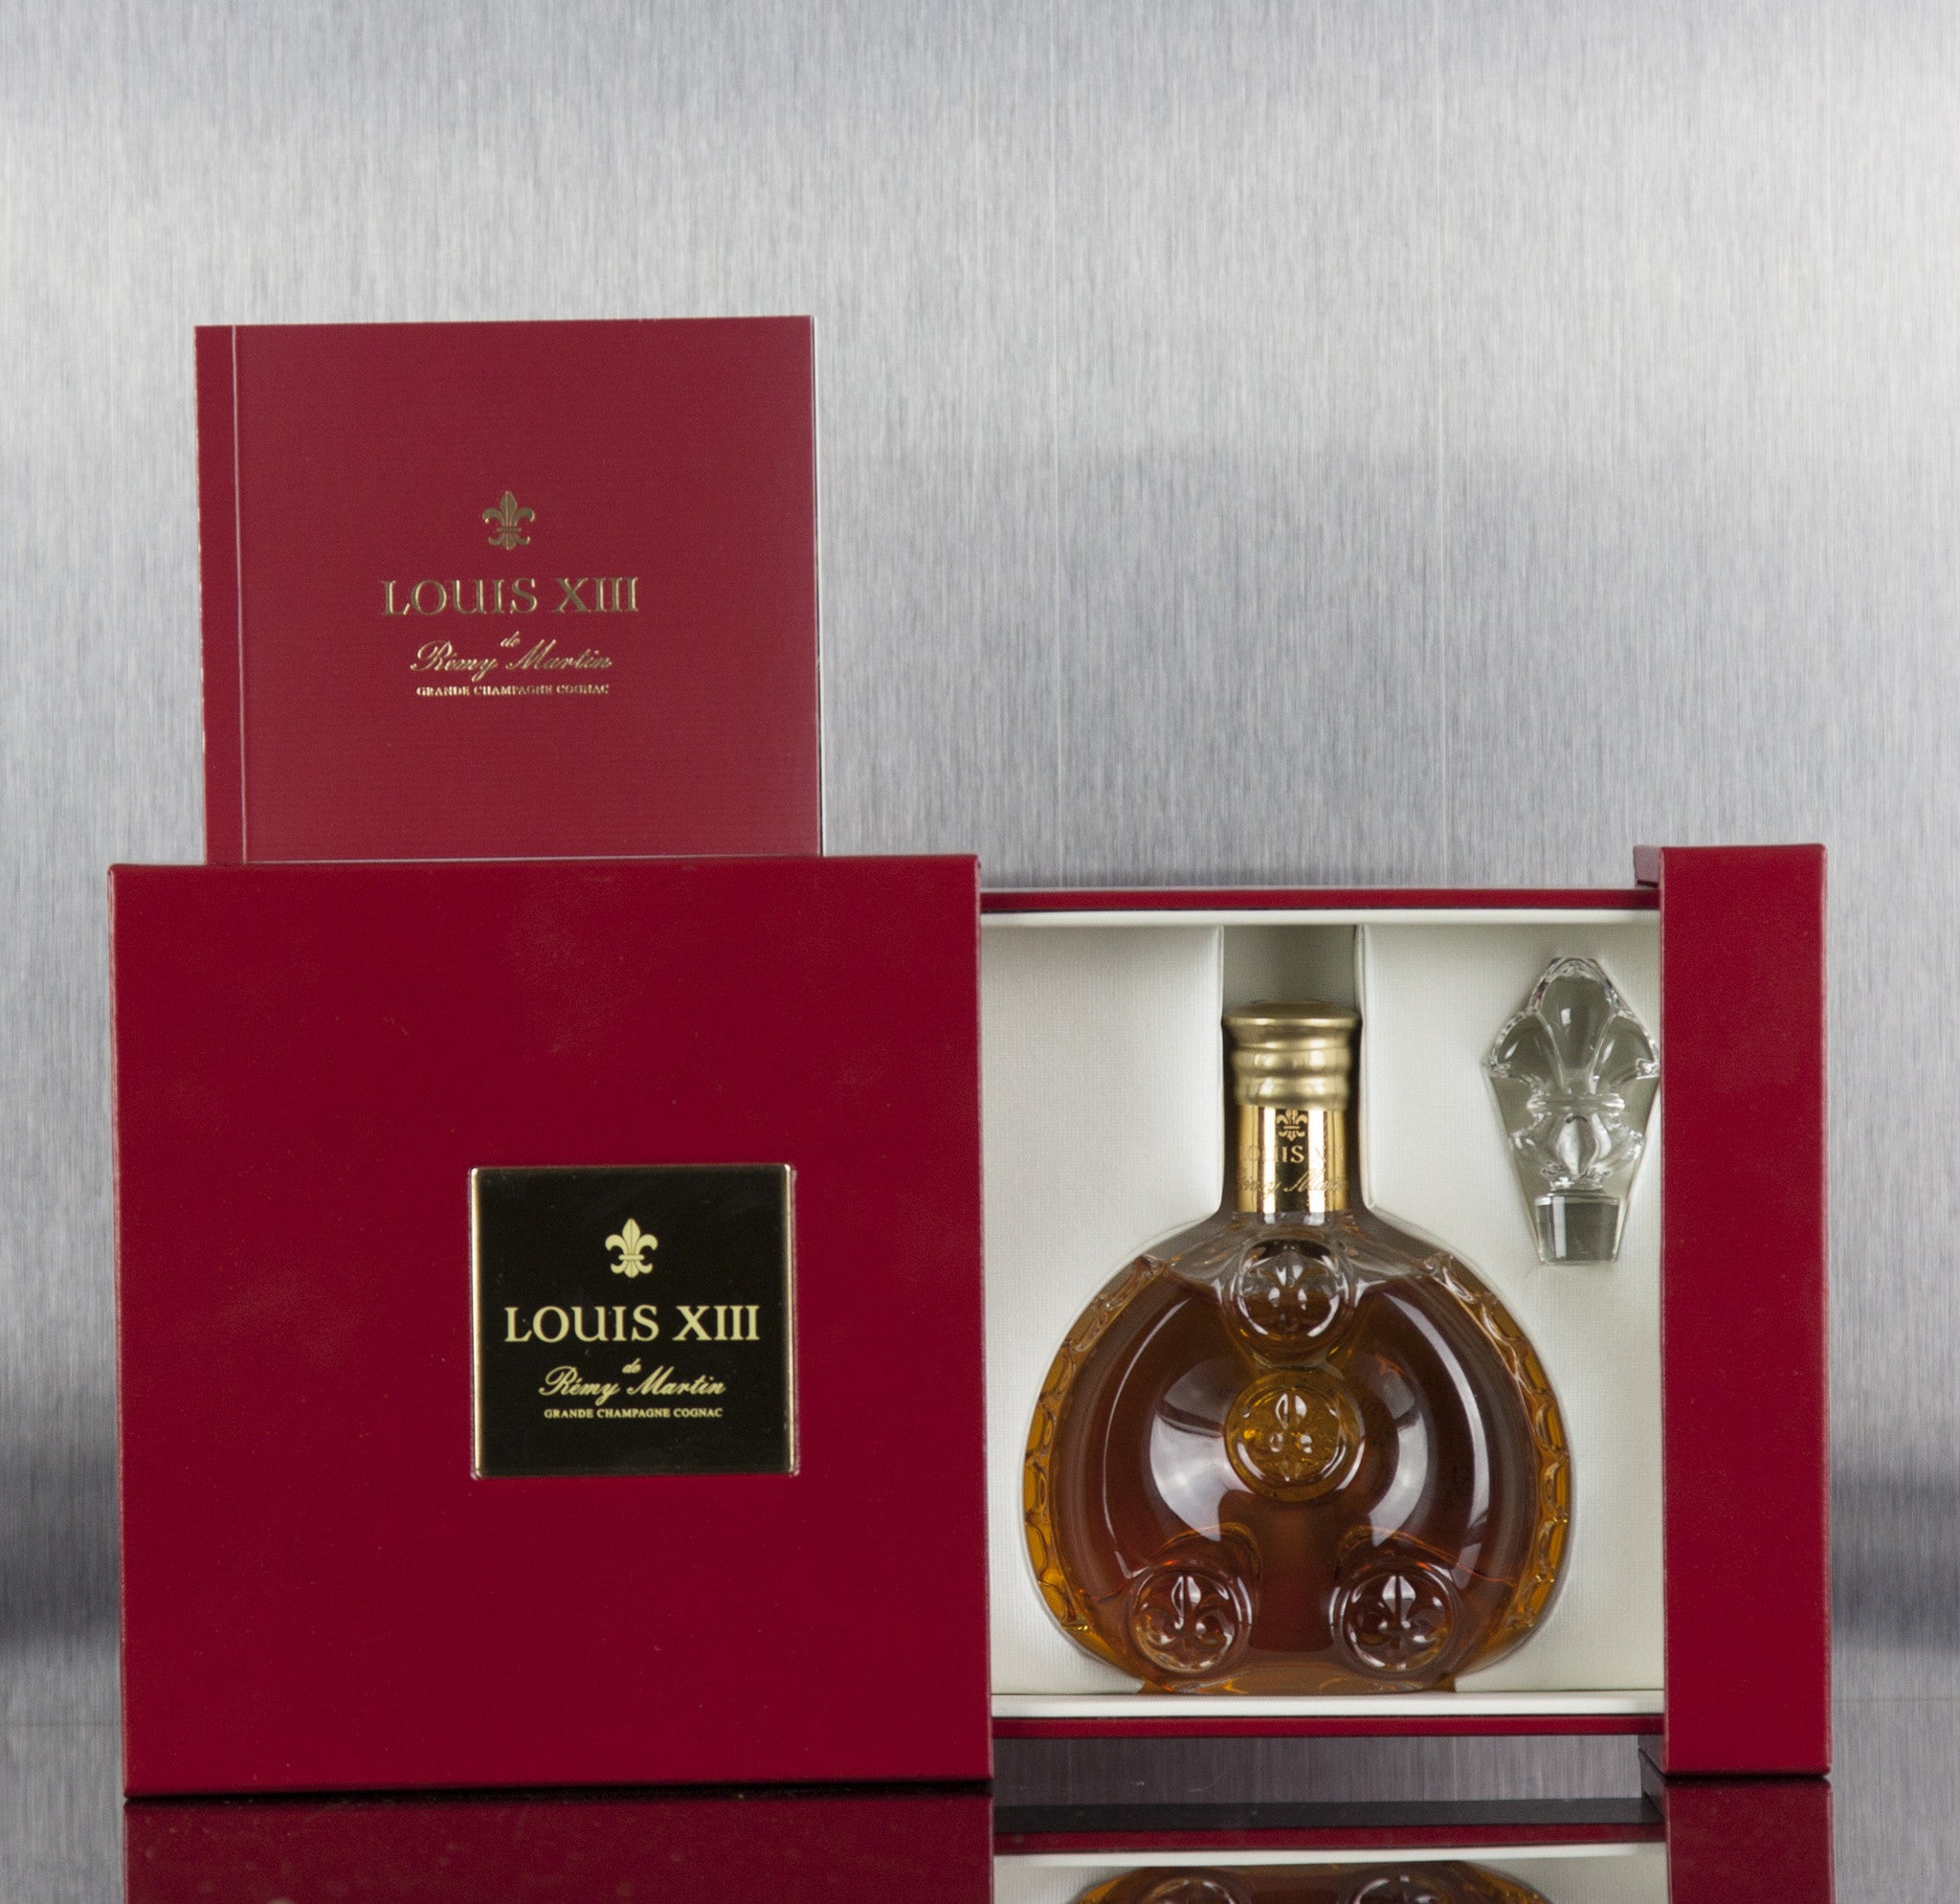 Remy Martin Louis XIII Cognac 50 ml